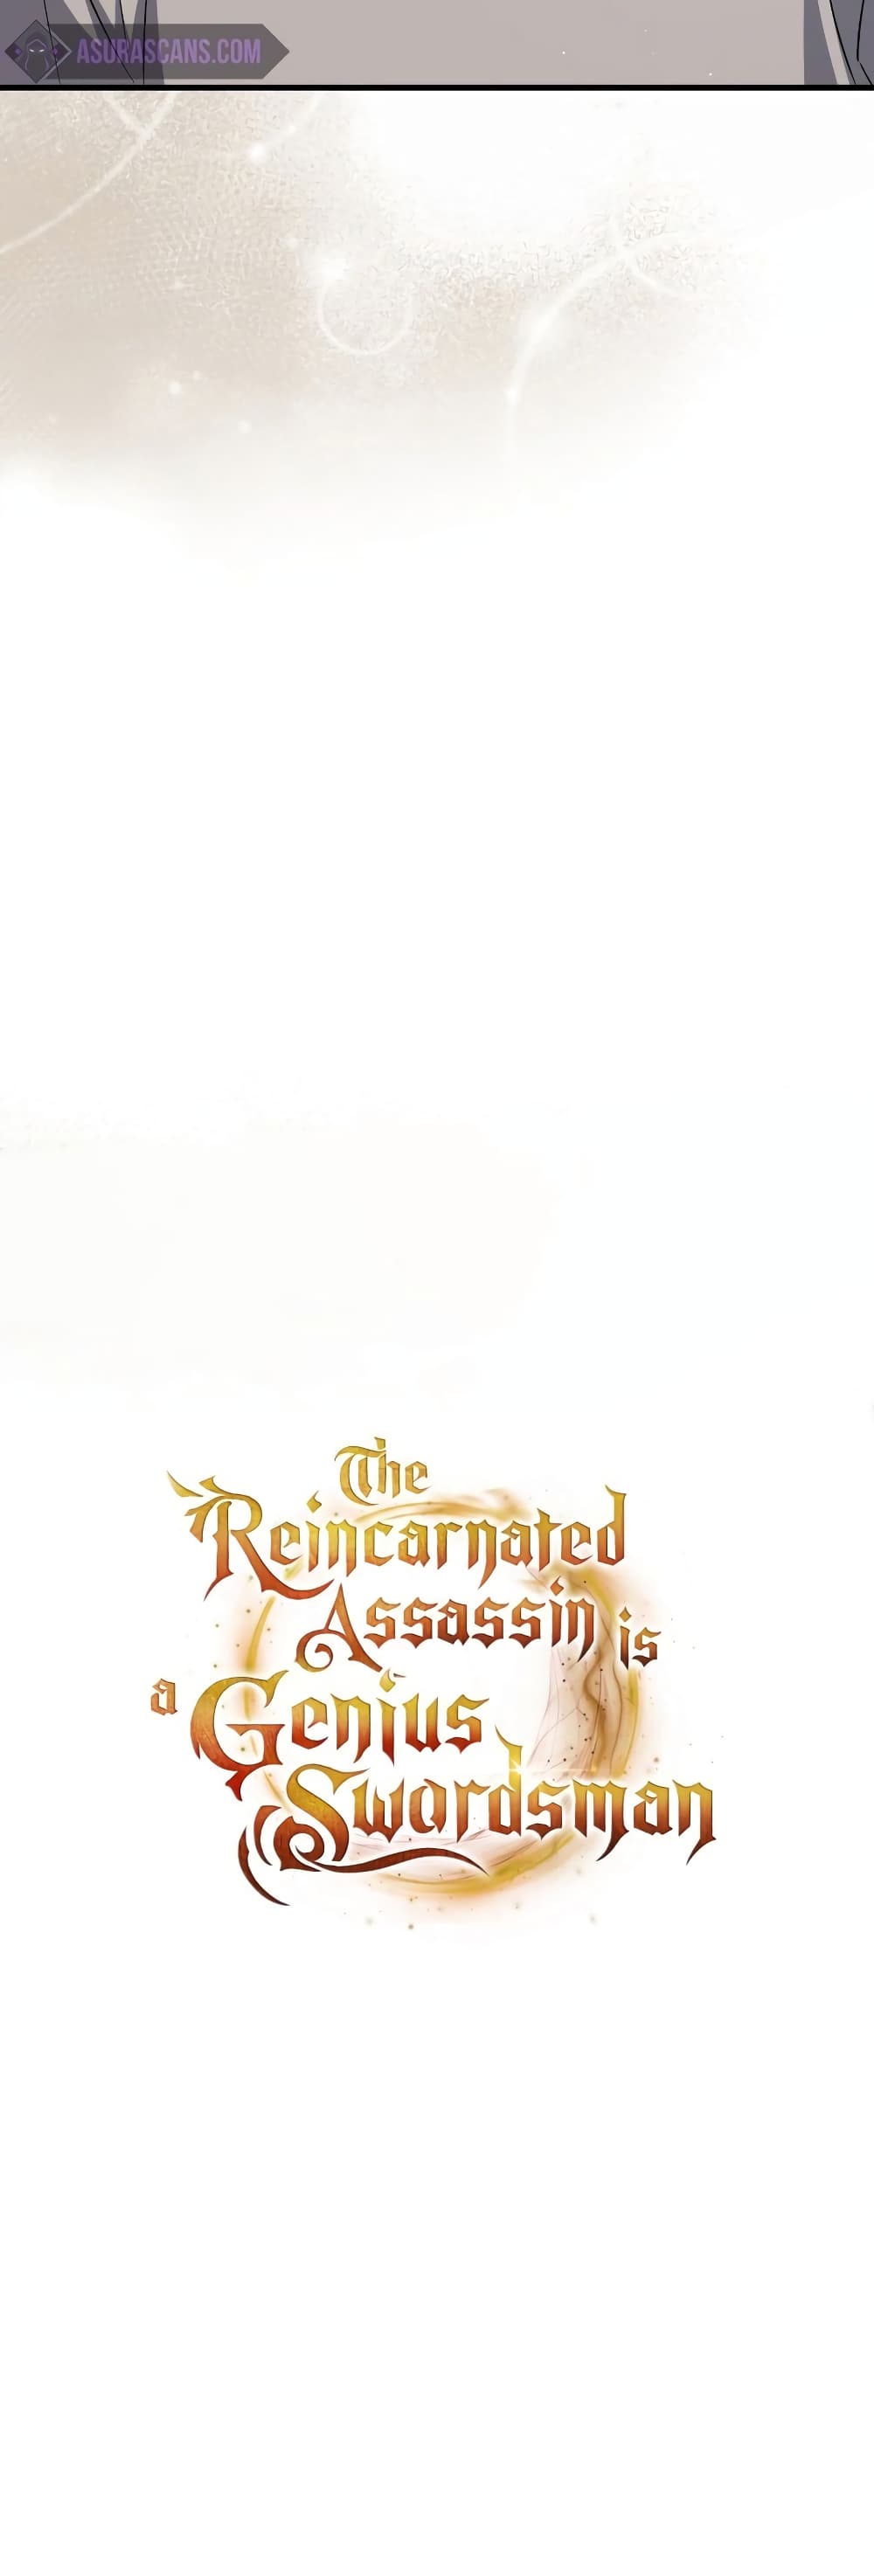 The Reincarnated Assassin is a Genius Swordsman 13-13